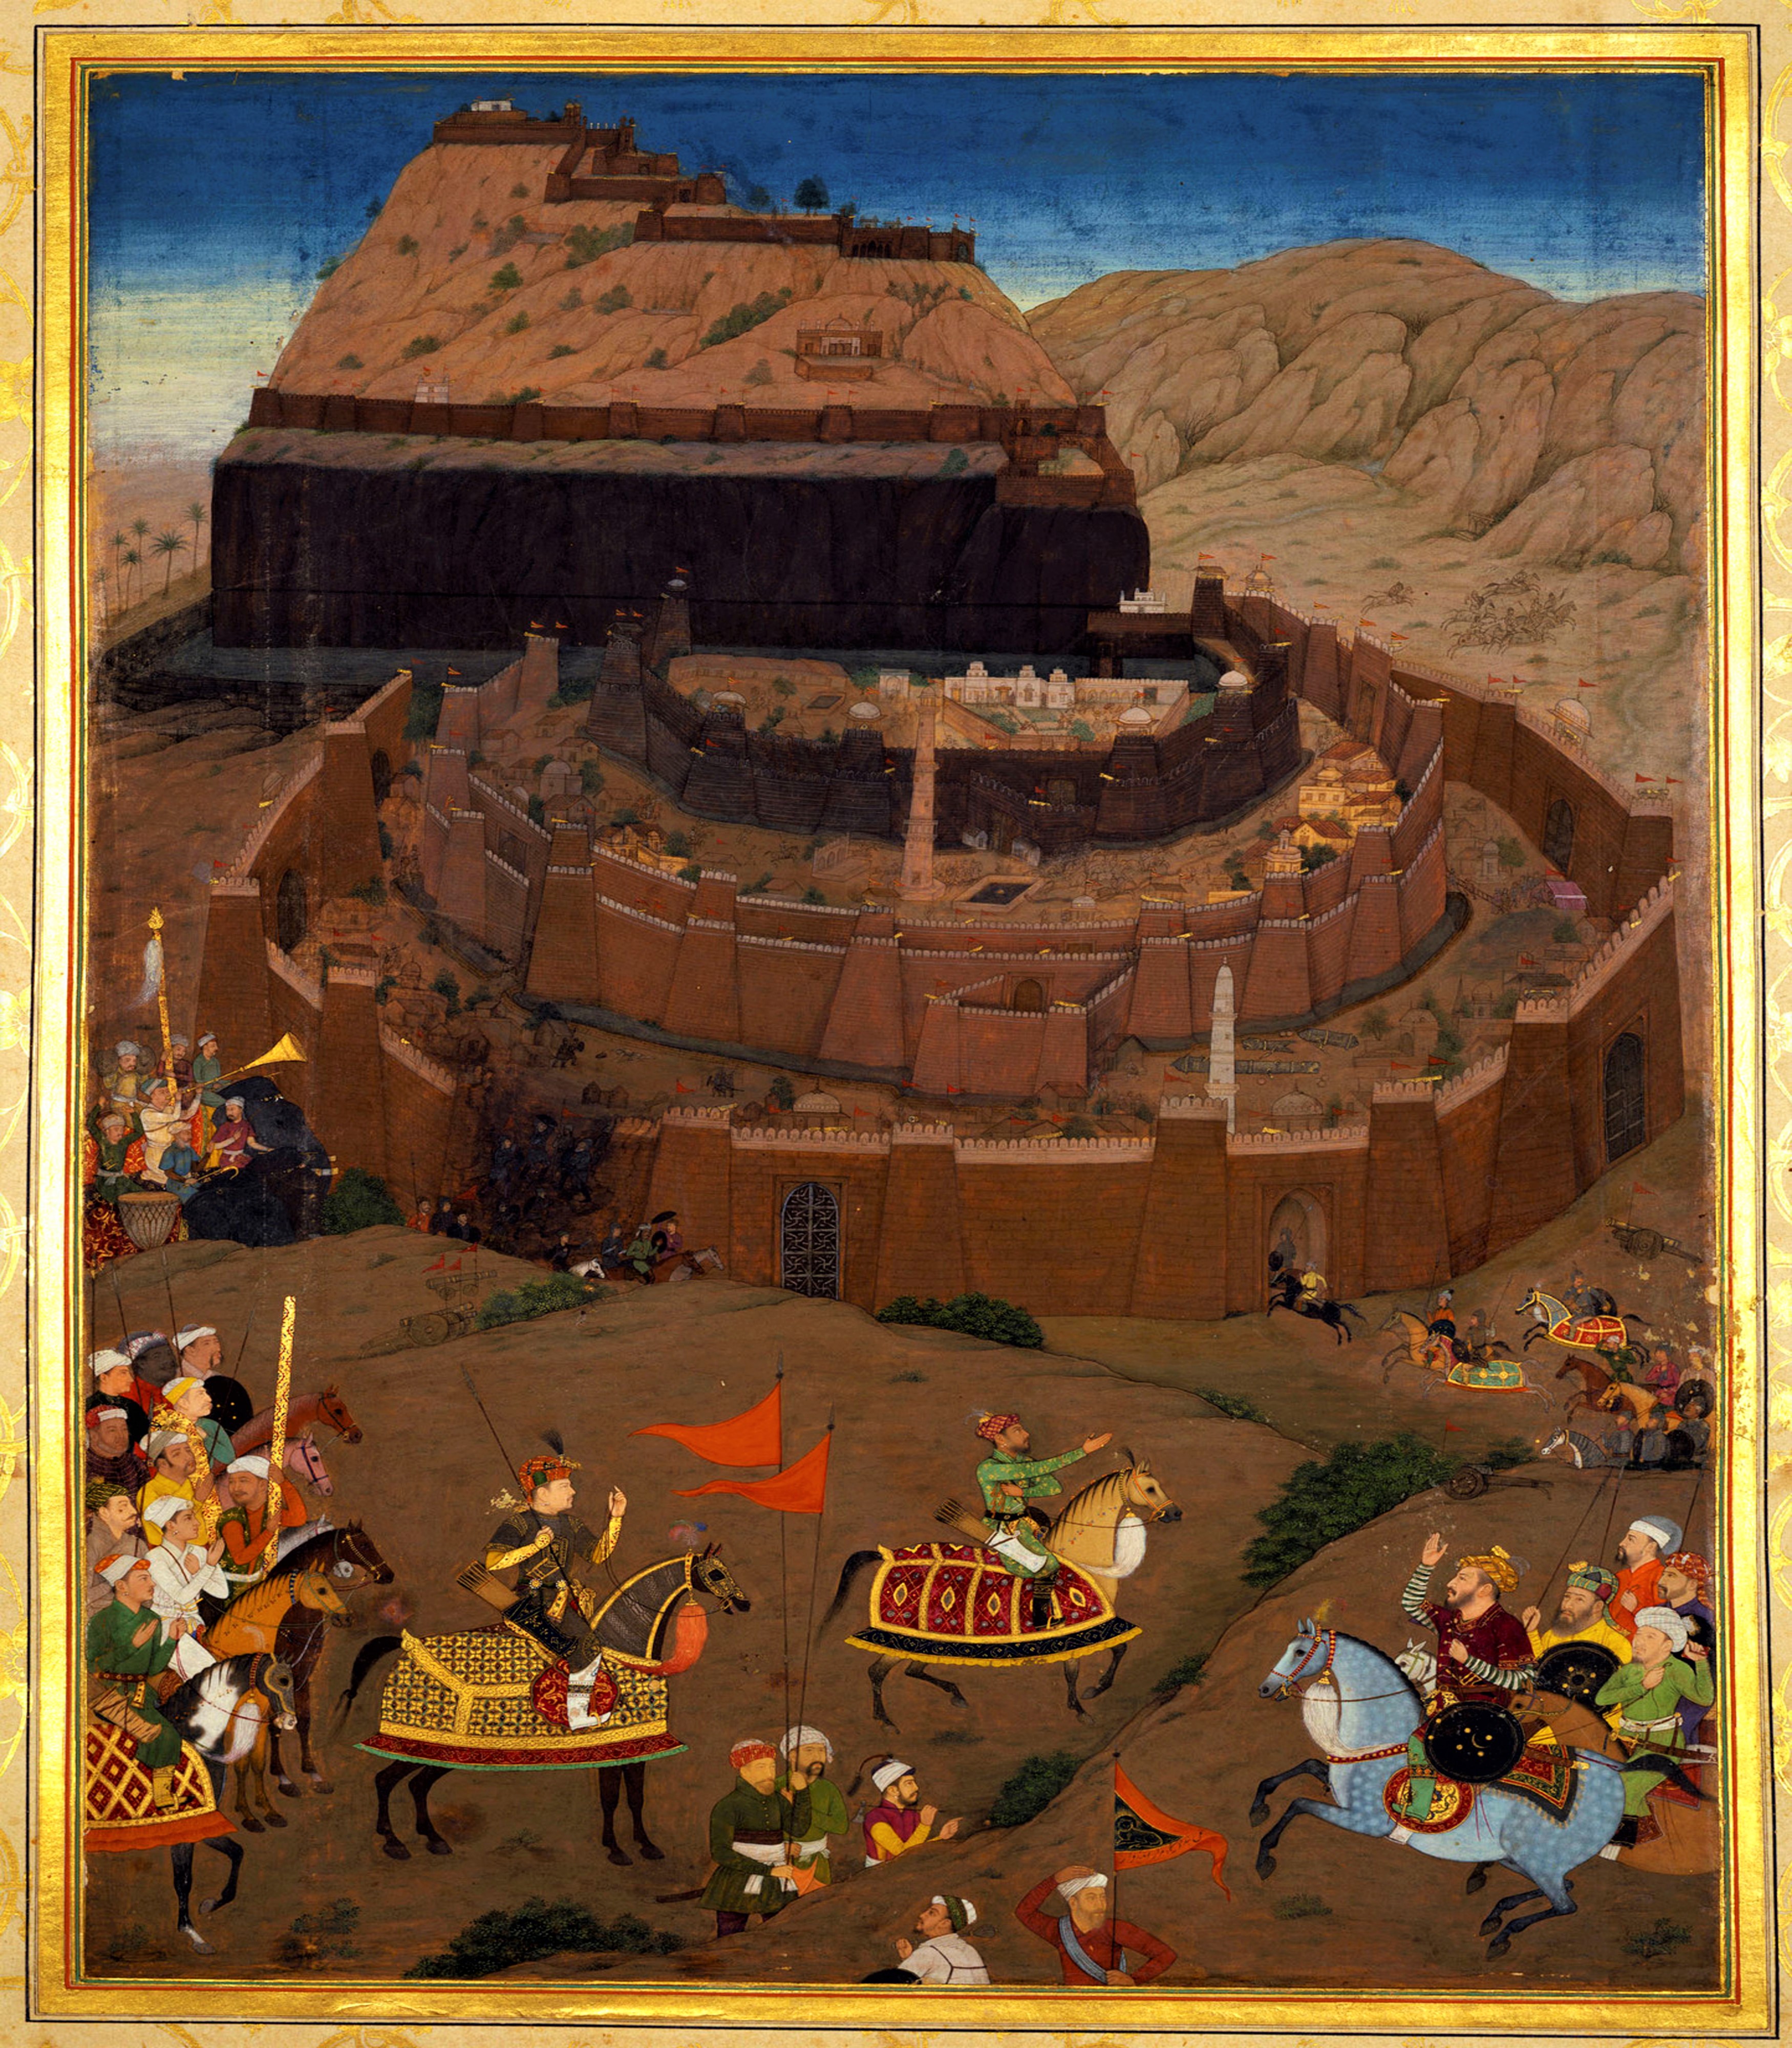 Capture of Daulatabad by Mughals